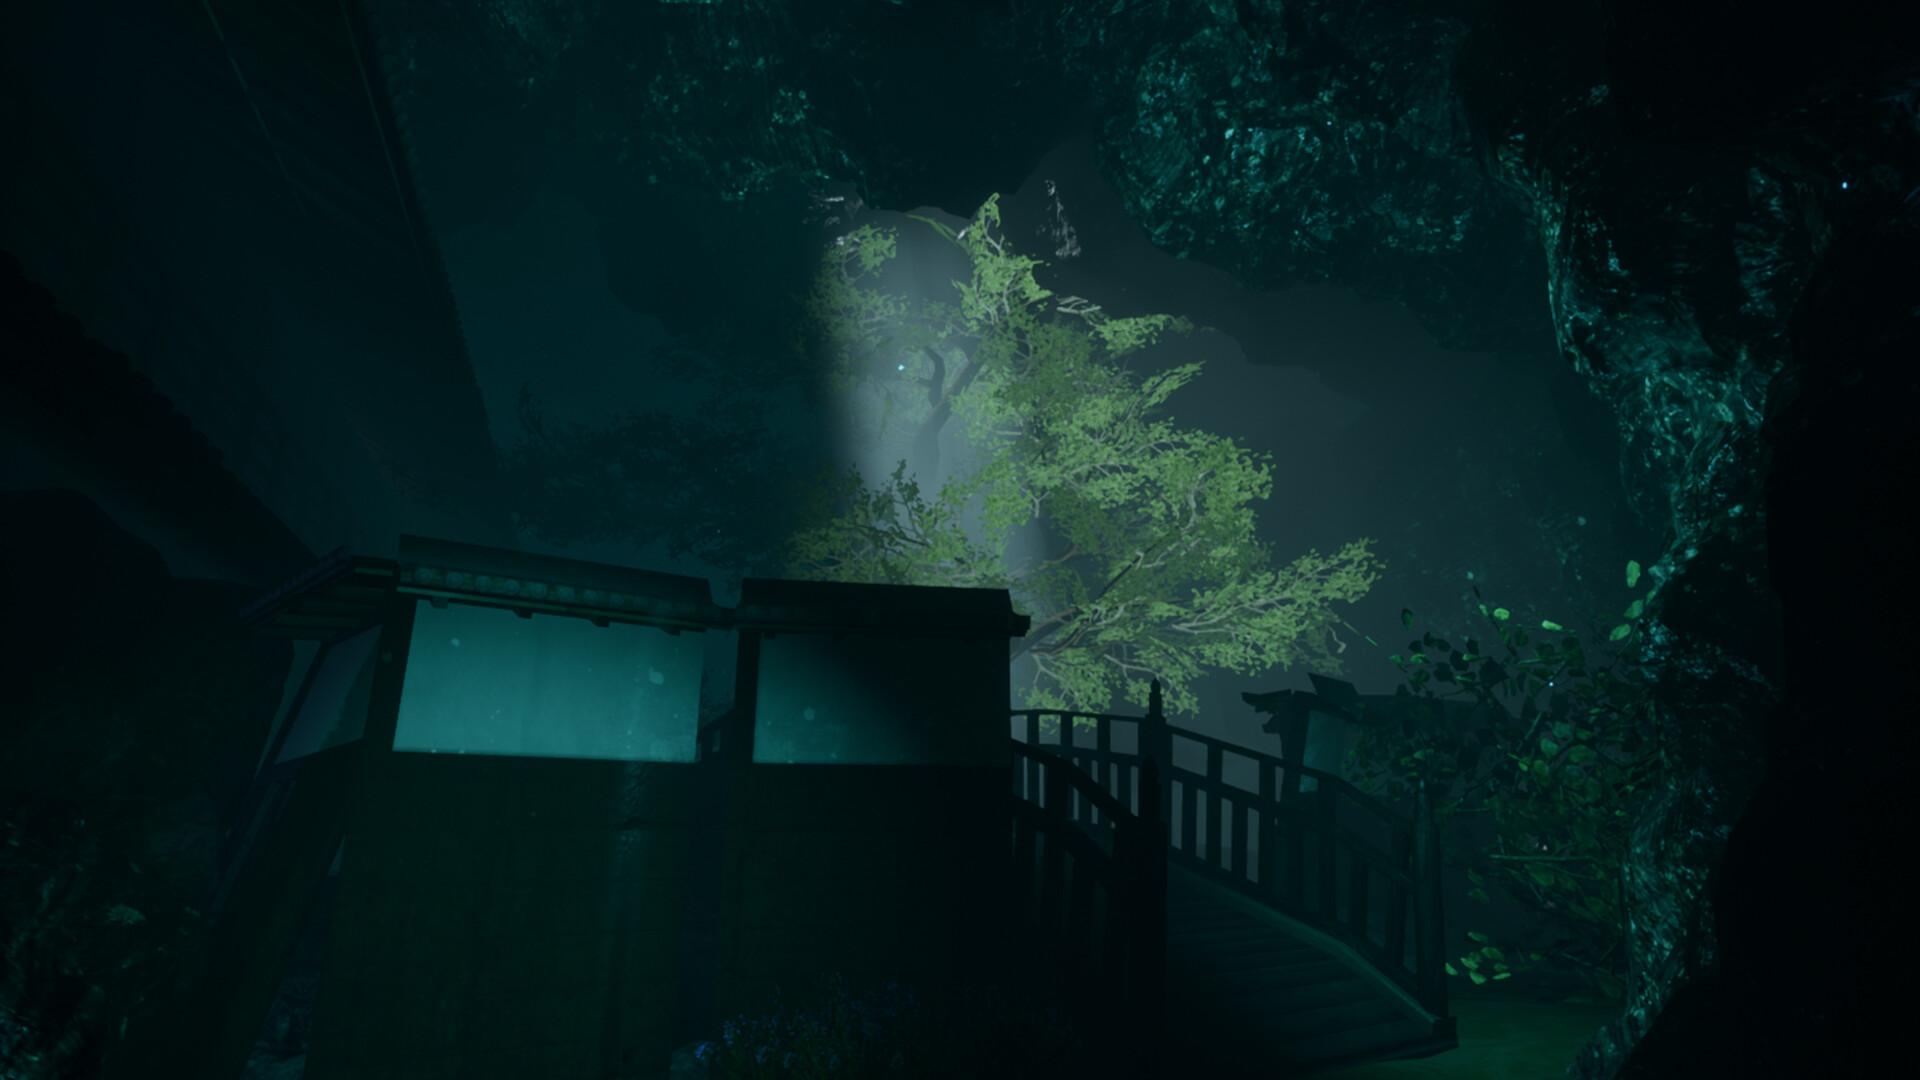 Screenshot №17 from game Malice